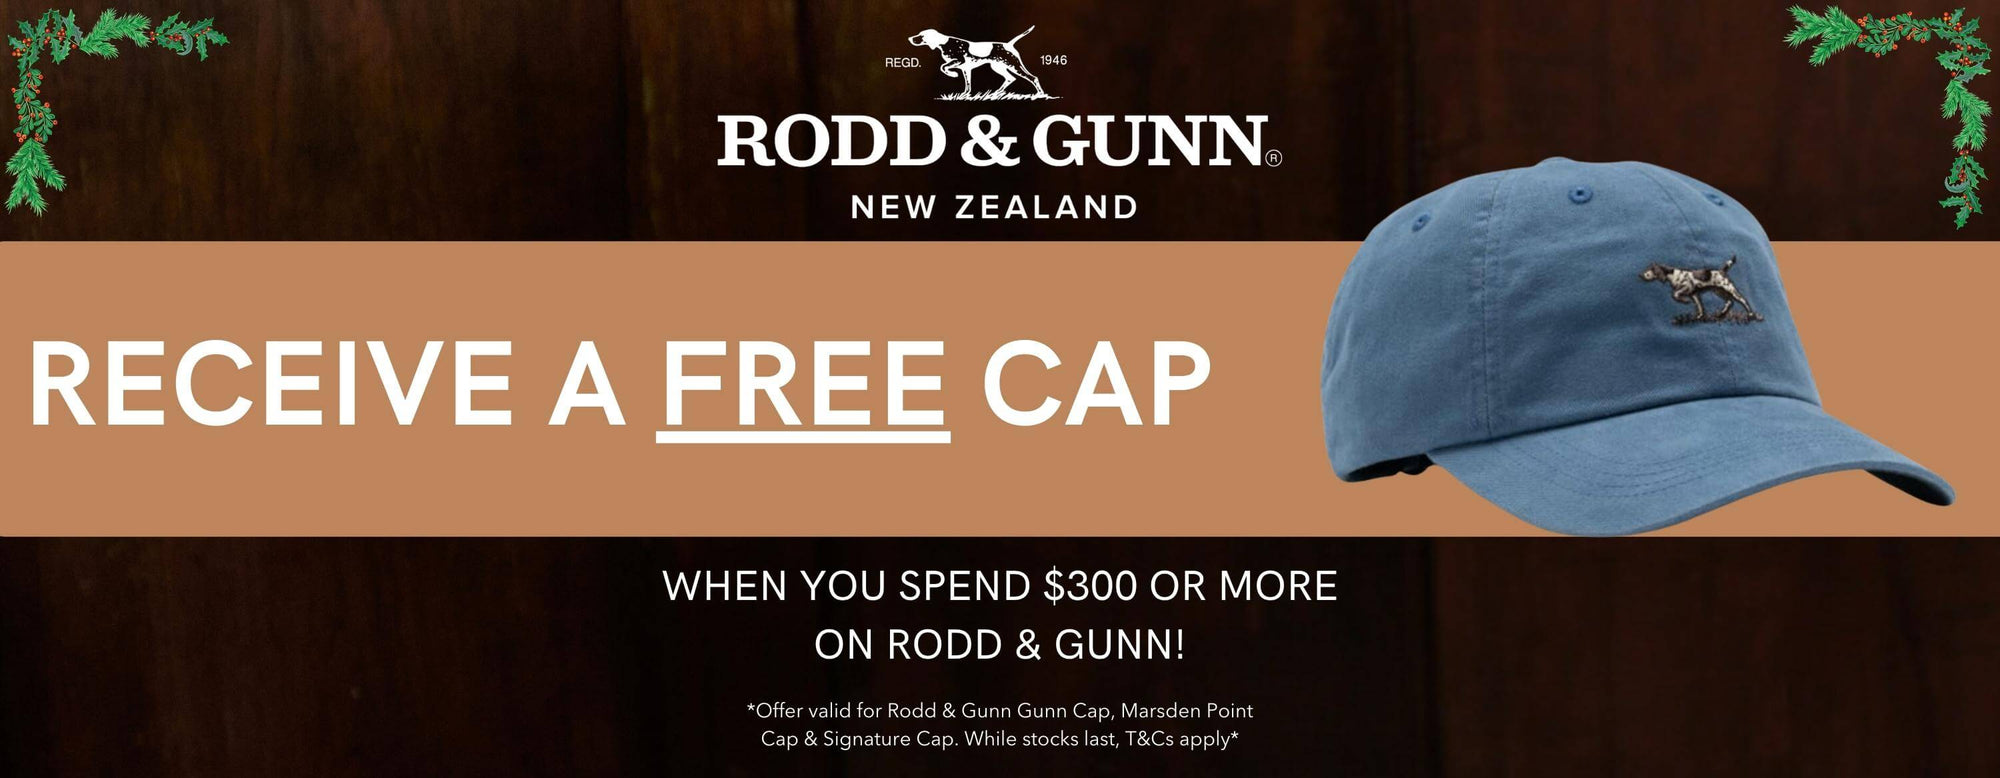 Receive a Free Rodd & Gunn Cap When You Spend Over $300 on Rodd & Gunn